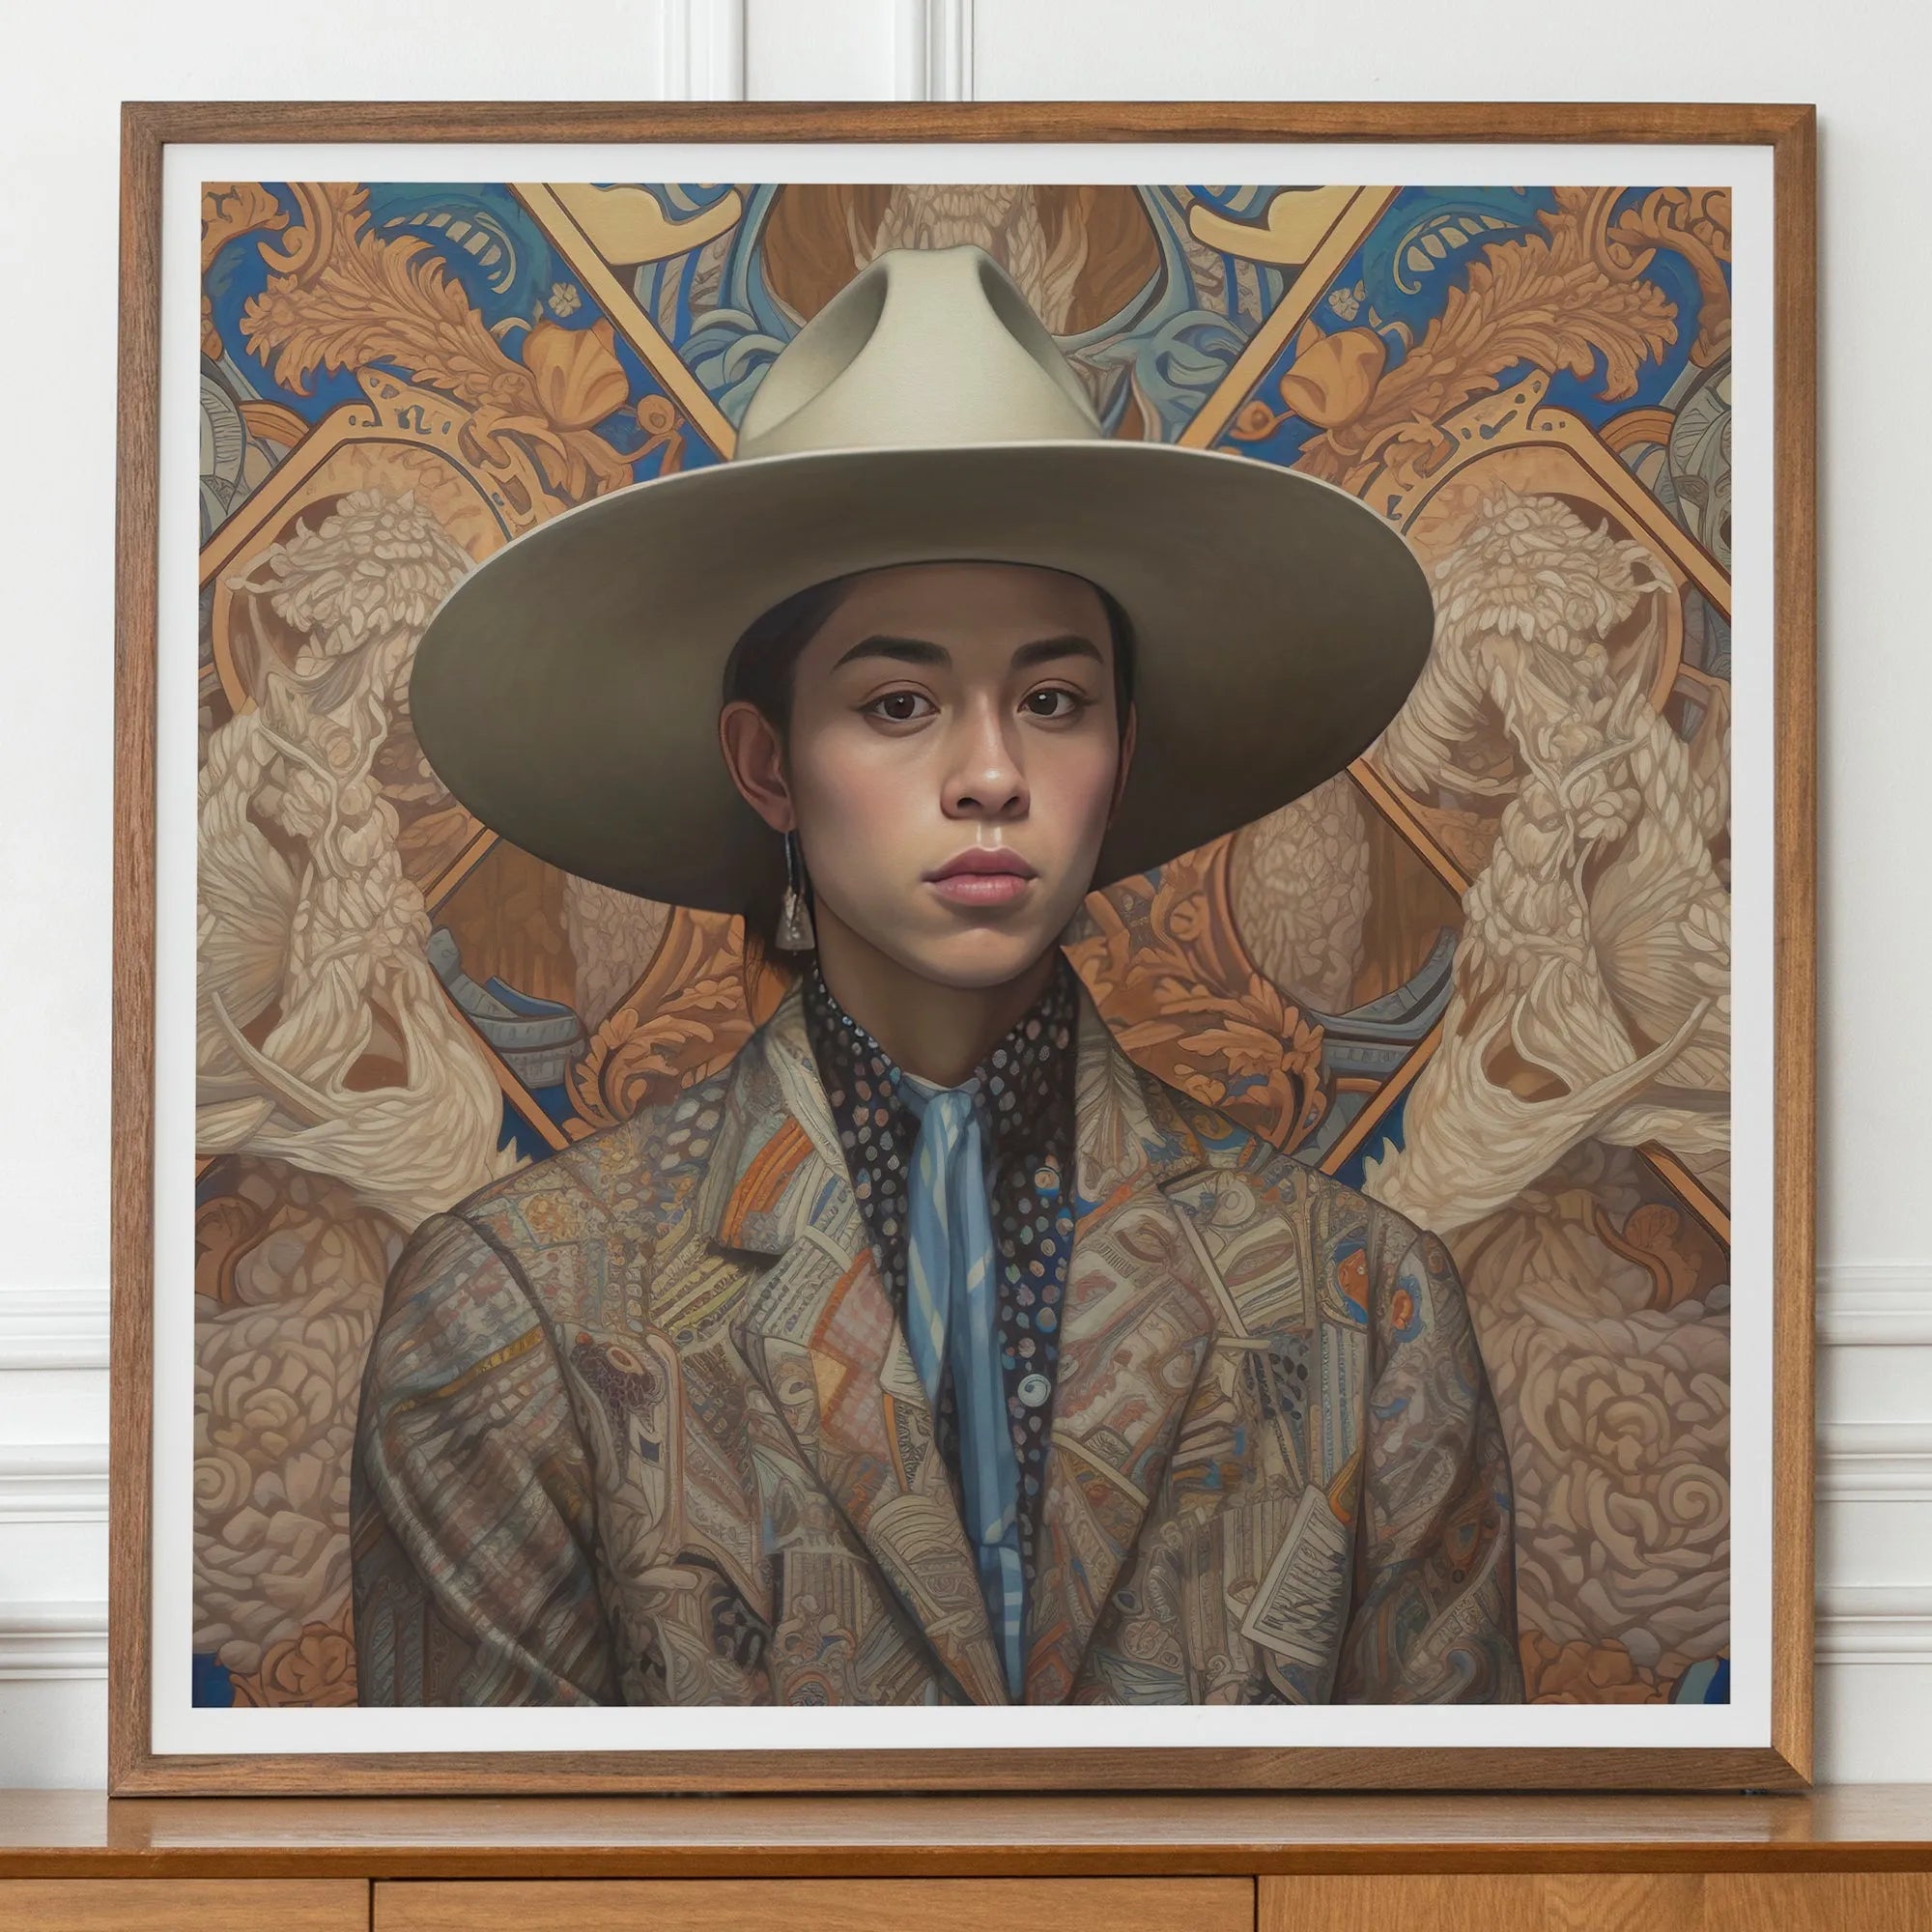 Angel The Transgender Cowboy - F2m Dandy Latinx Outlaw Art - 30’x30’ - Posters Prints & Visual Artwork - Aesthetic Art